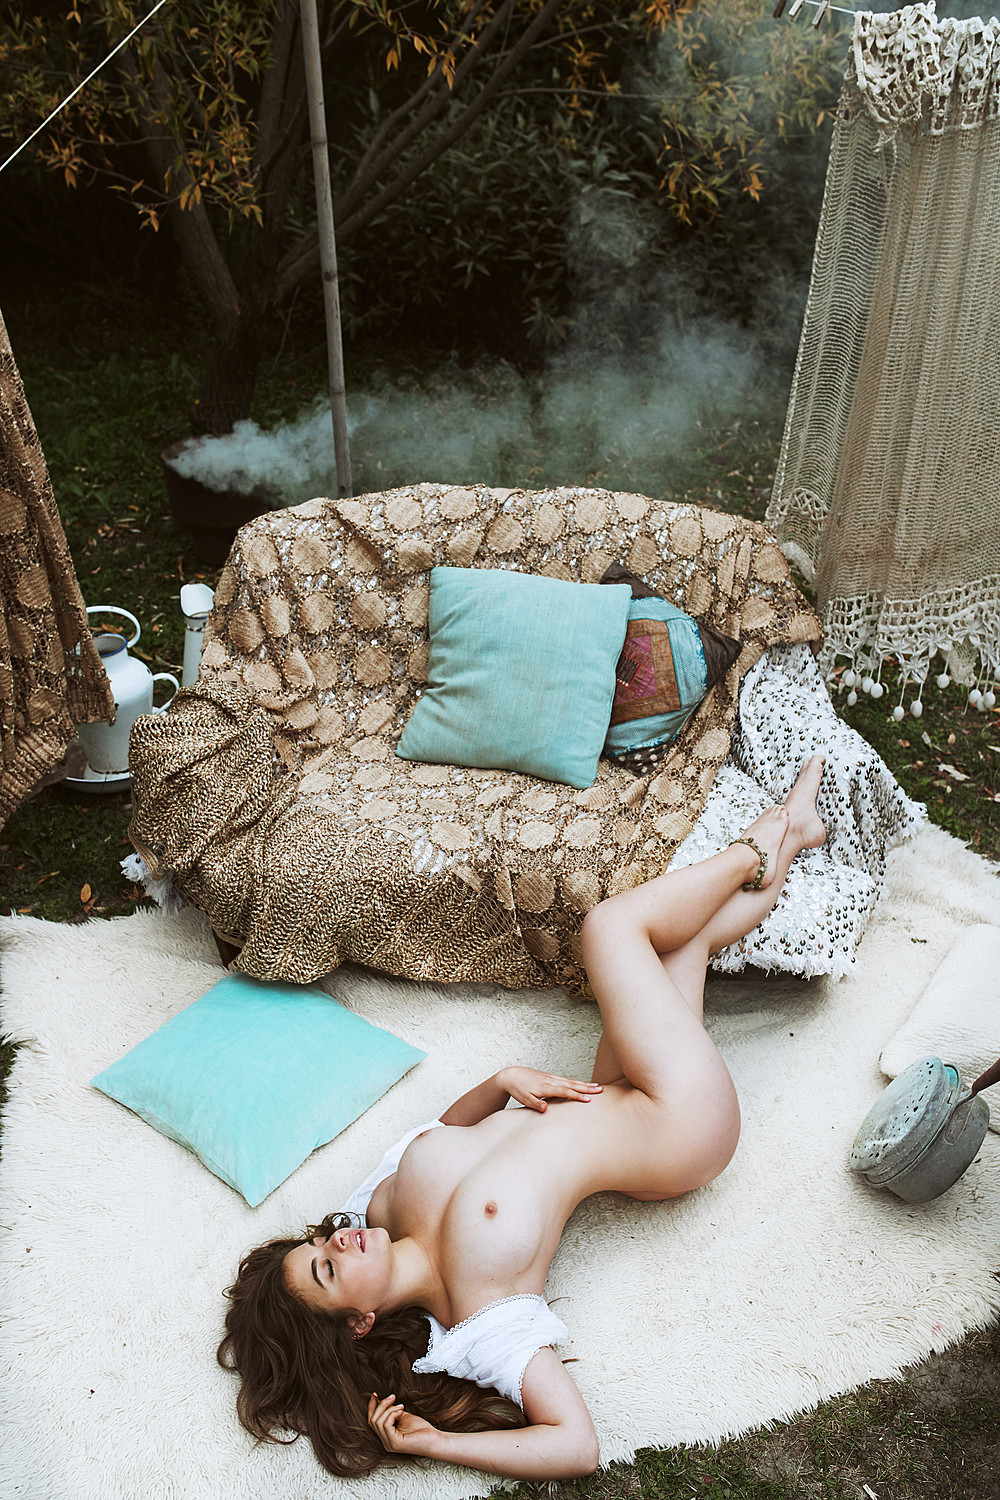 Ронья Форчер nude pics.